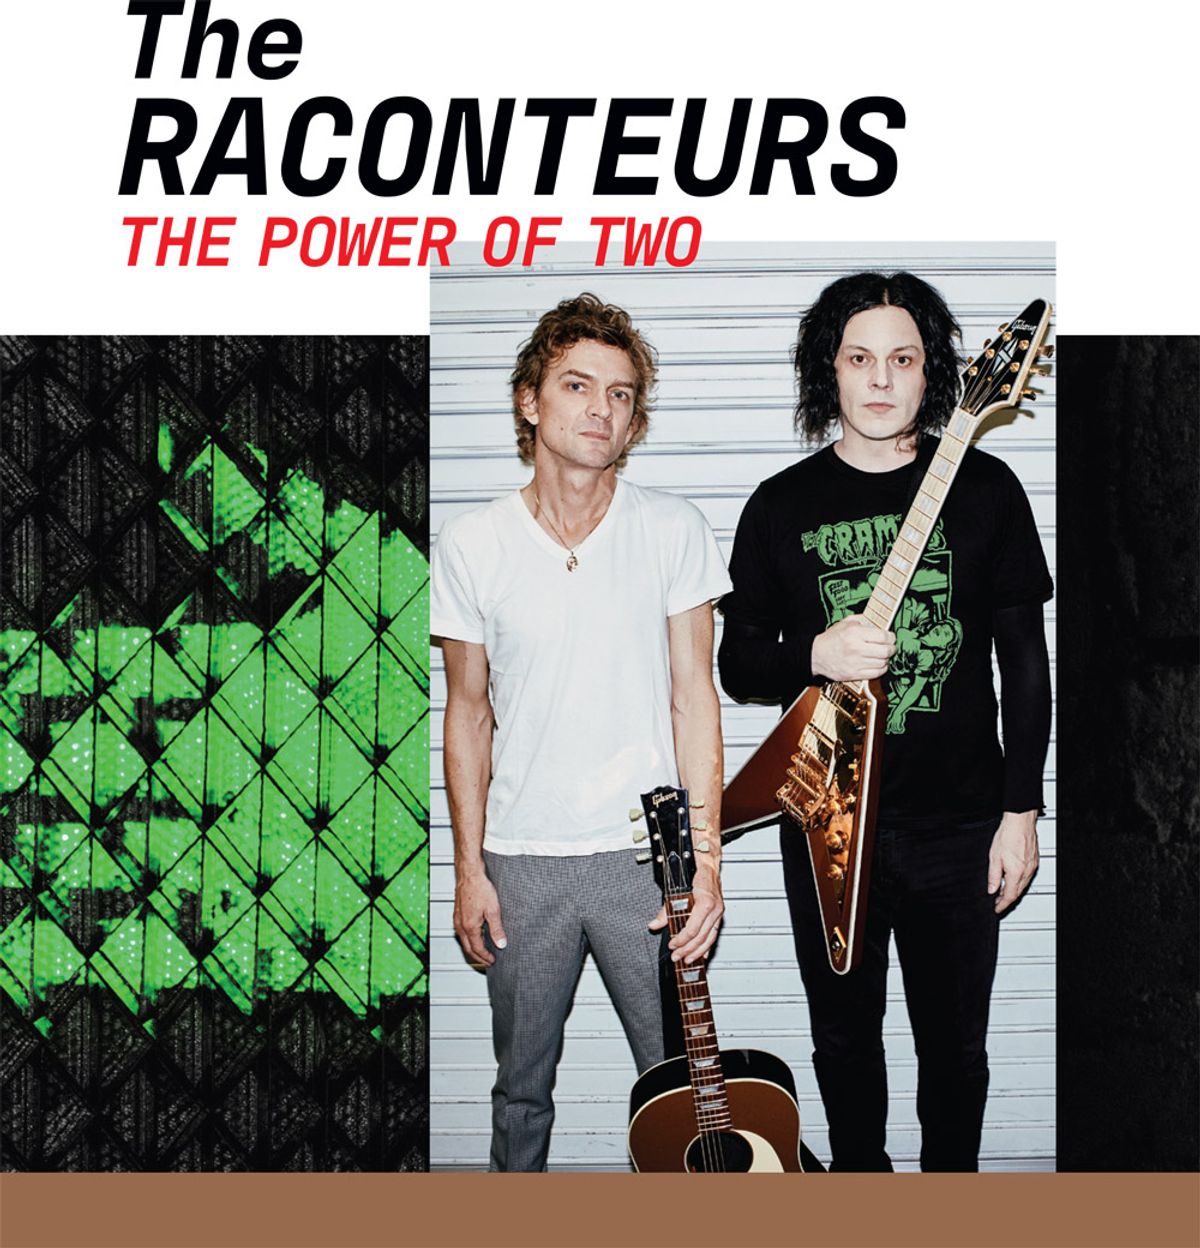 The Raconteurs’ Jack White and Brendan Benson